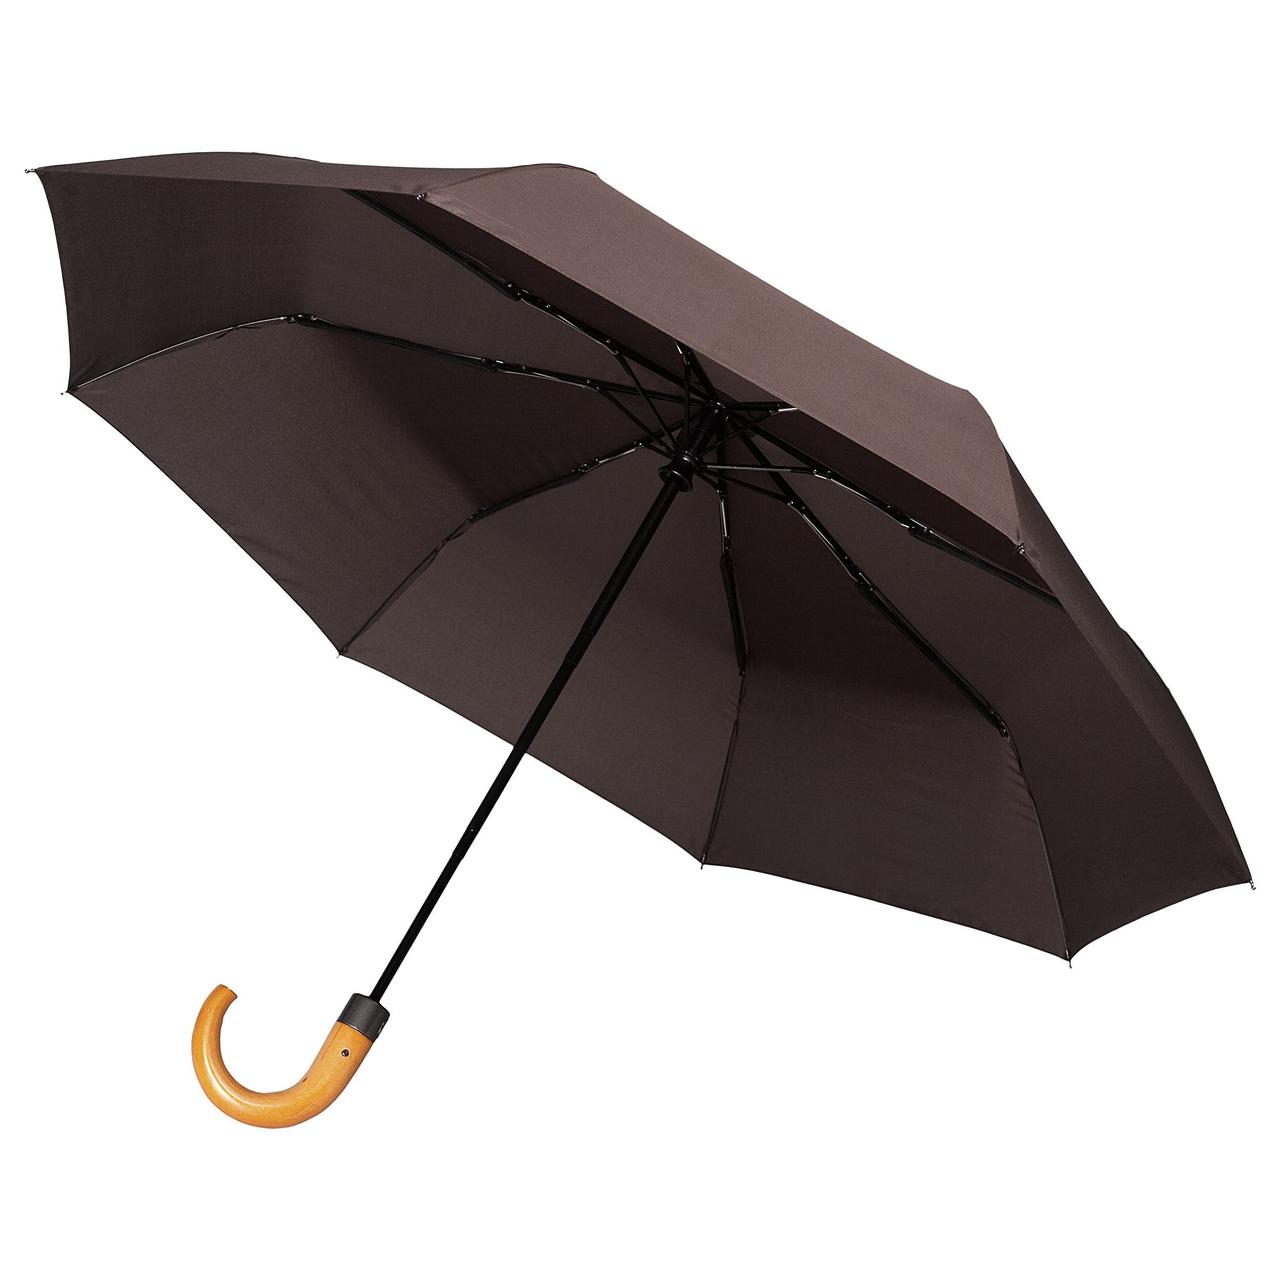 Складной зонт Unit Classic, коричневый (артикул 5550.59), фото 1